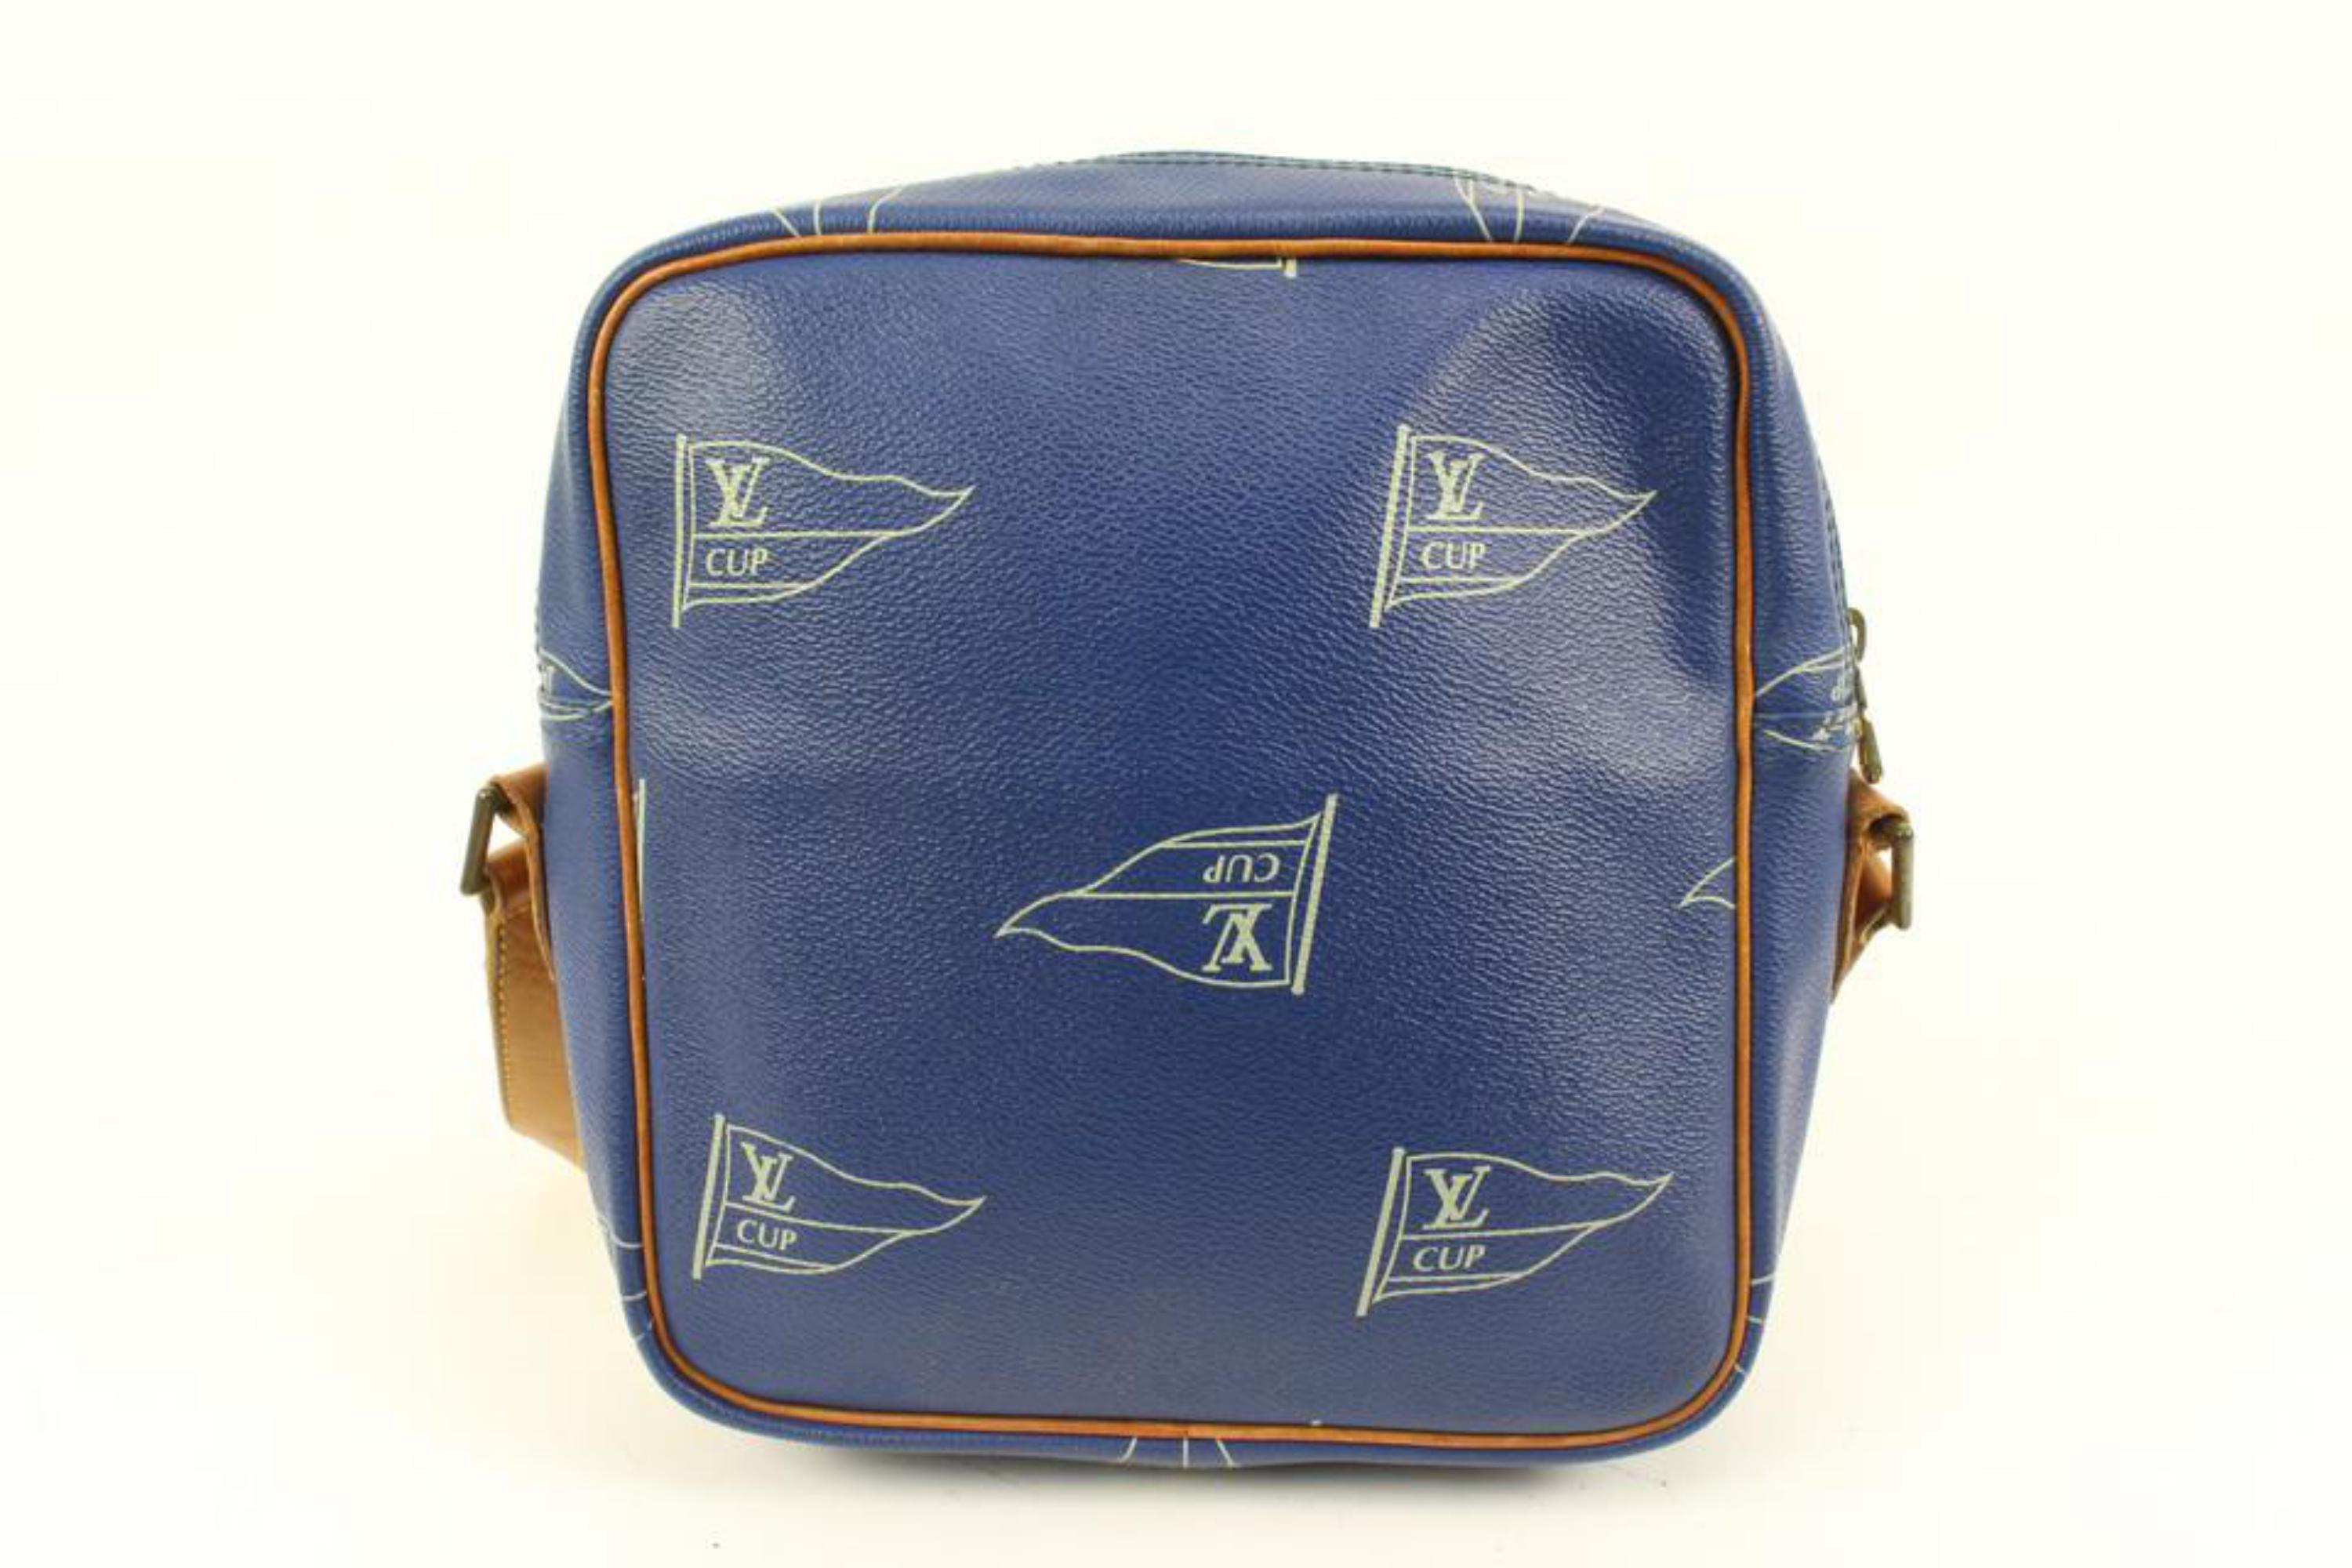 Louis Vuitton 1991 Blue LV Cup Sac San Diego Crossbody Bag 96lz425s For Sale 4